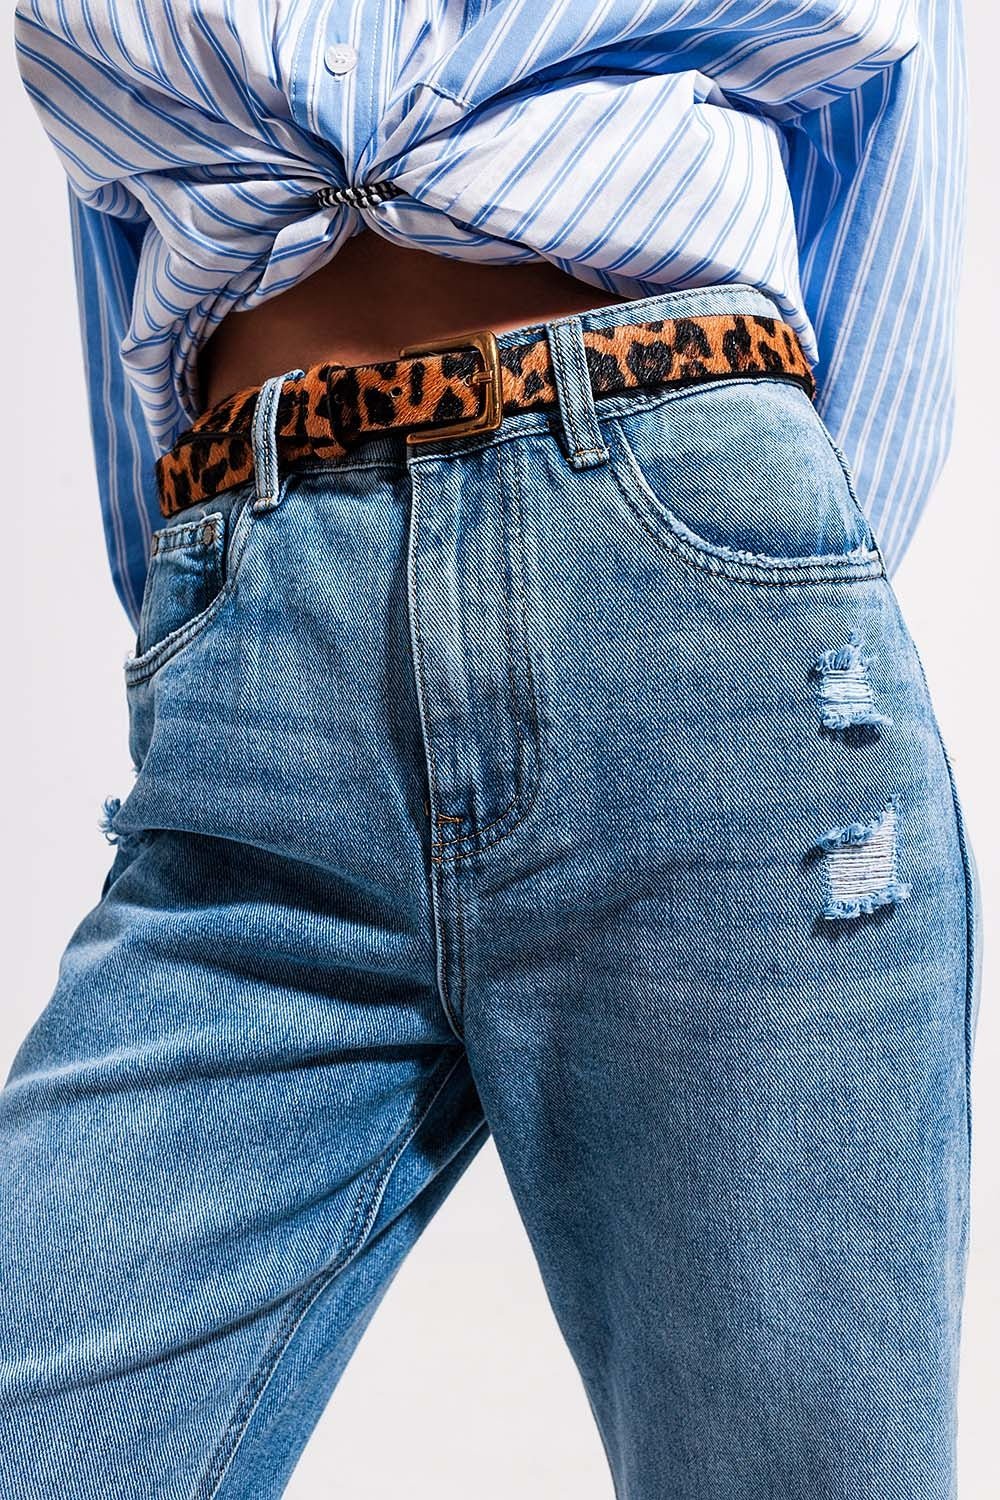 High Waist Jeans With Split Hem in Vintage Wash - Mack & Harvie